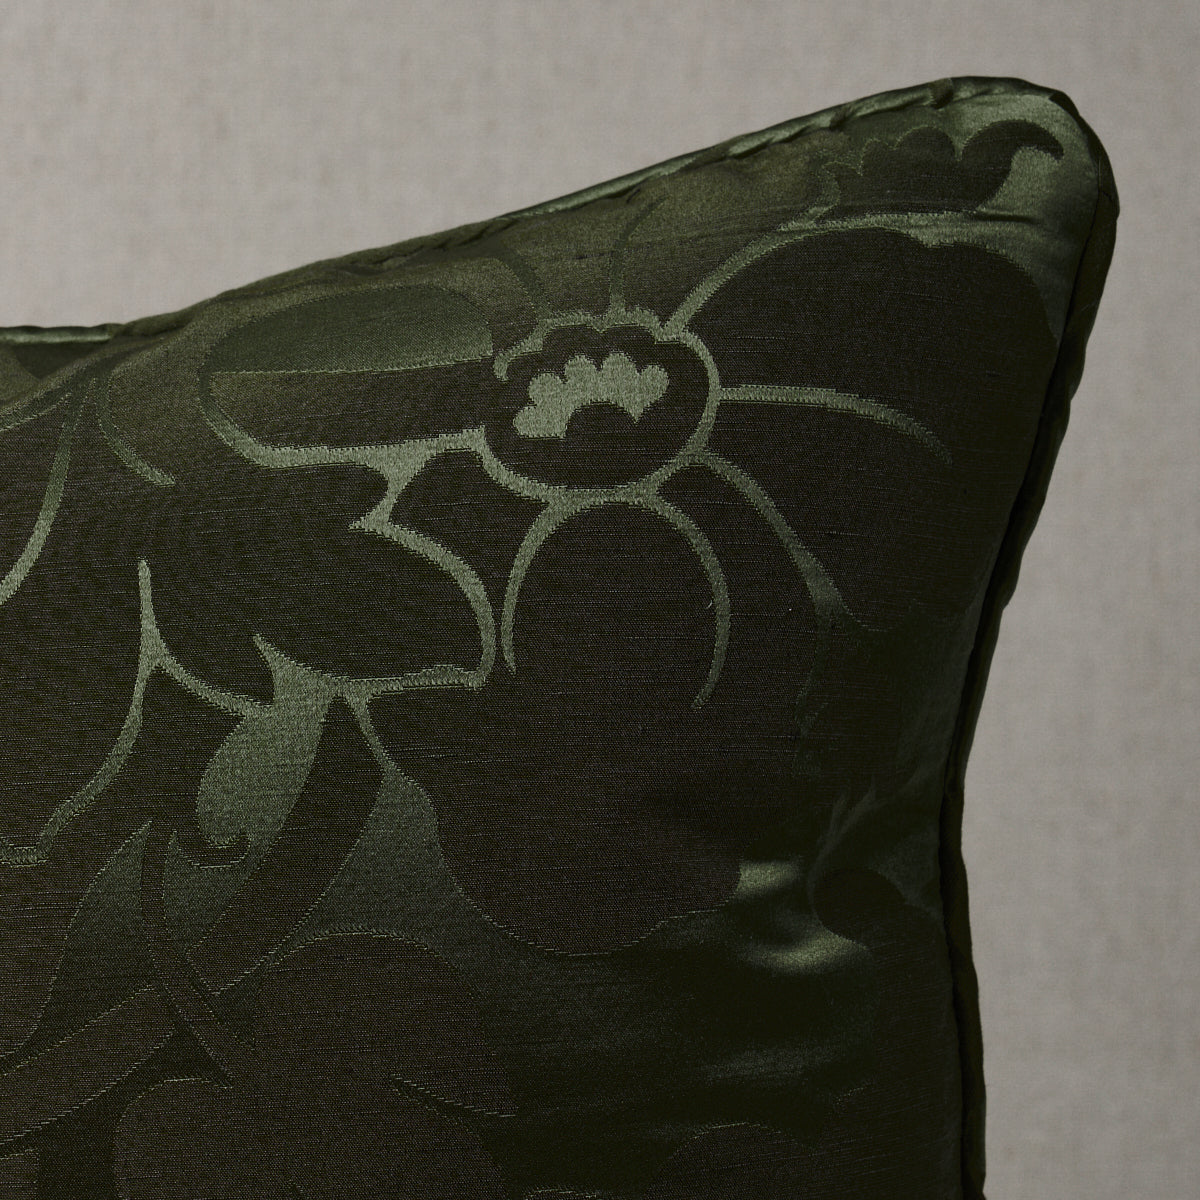 Dandridge Damask Pillow | Magnolia